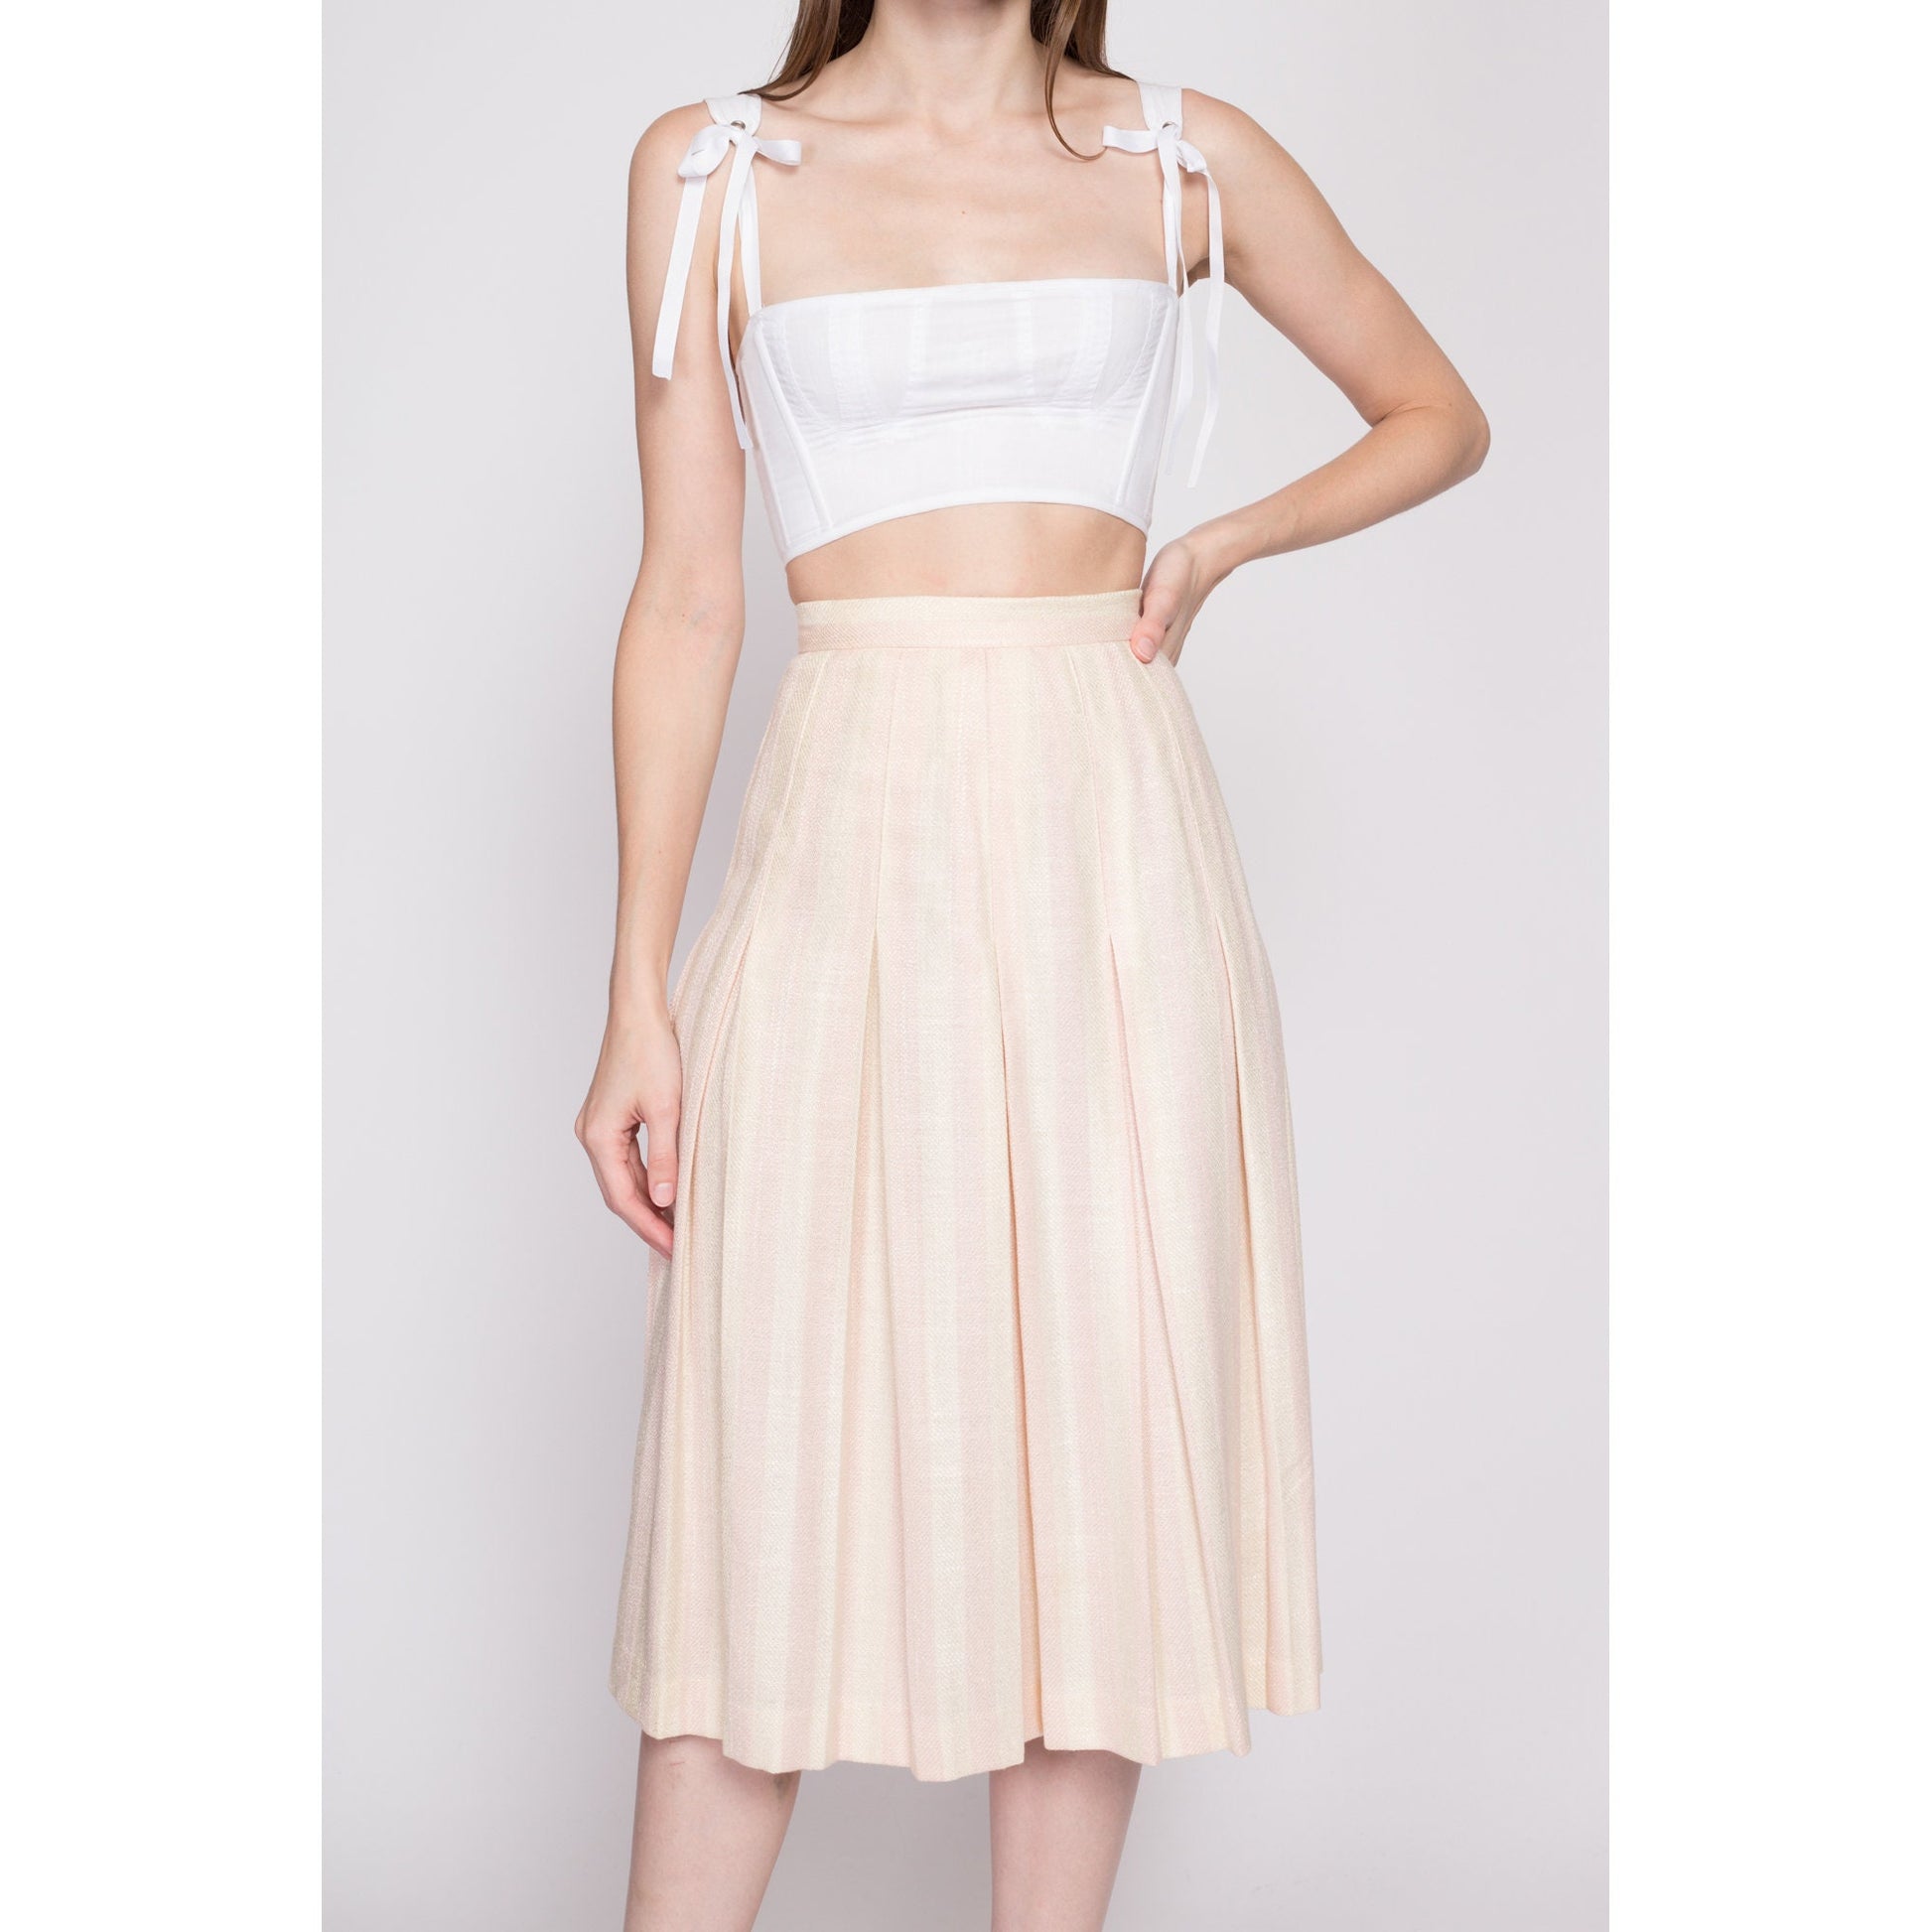 80s Pastel Striped Pleated Midi Skirt - Extra Small, 23.5" | Vintage Micki Pink Yellow High Waist Preppy Schoolgirl Skirt